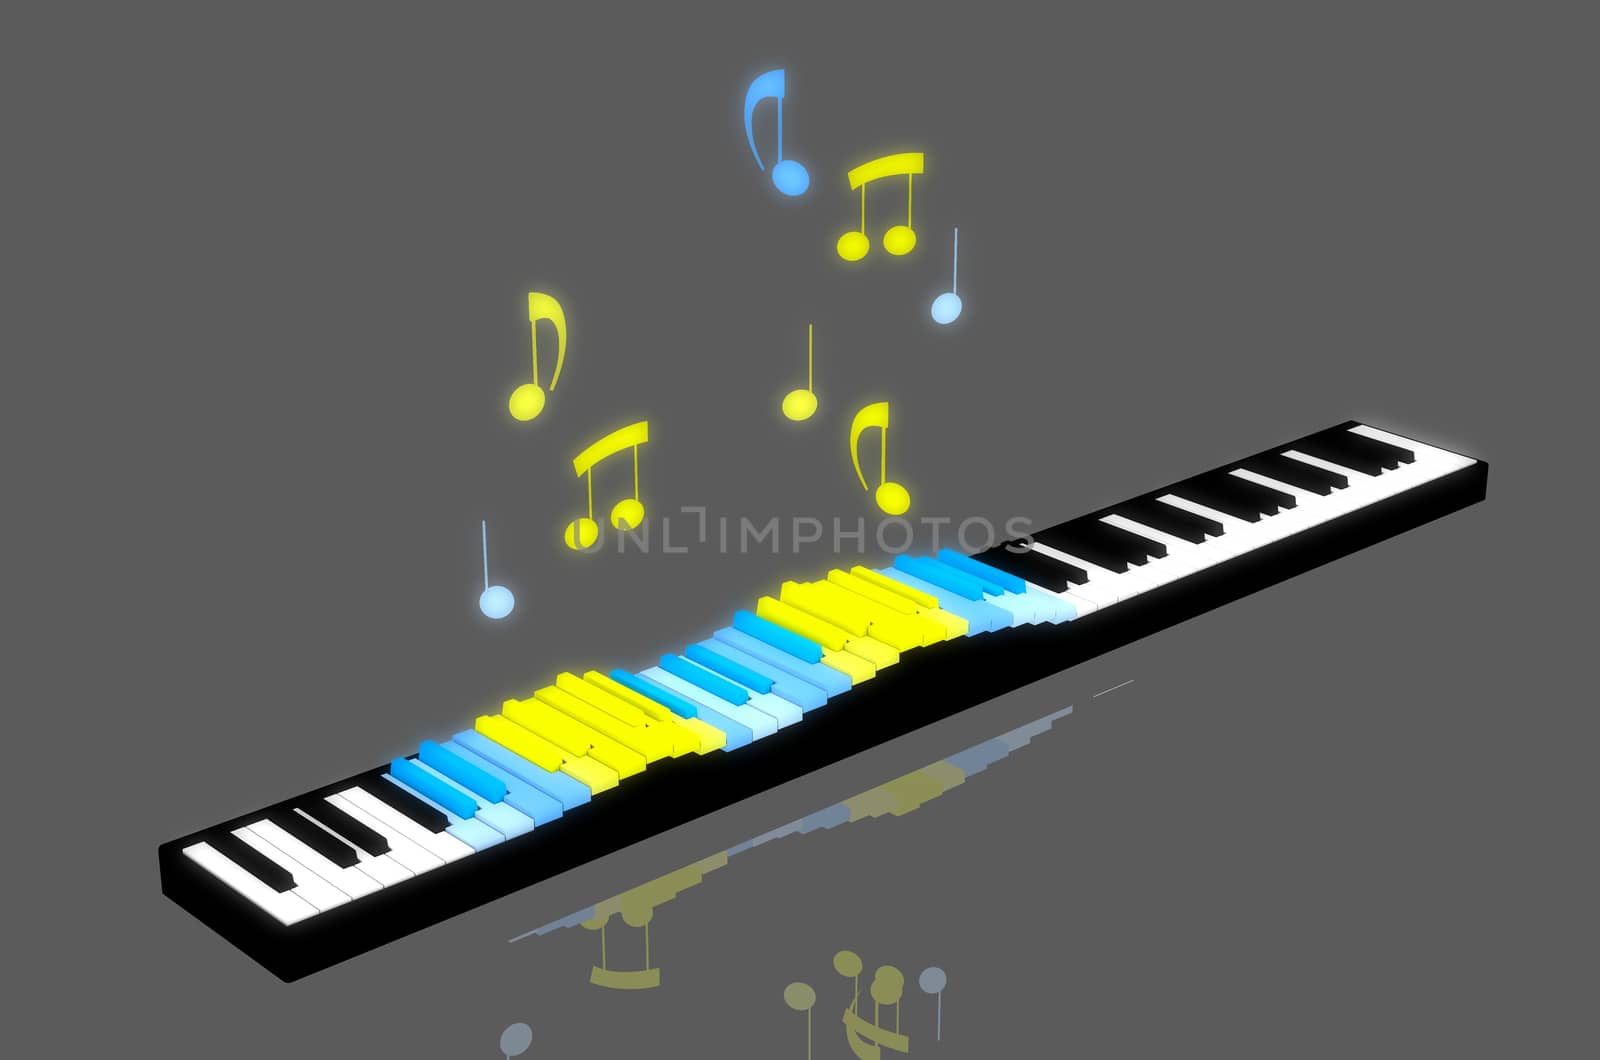 3D image of shiny colored piano keys